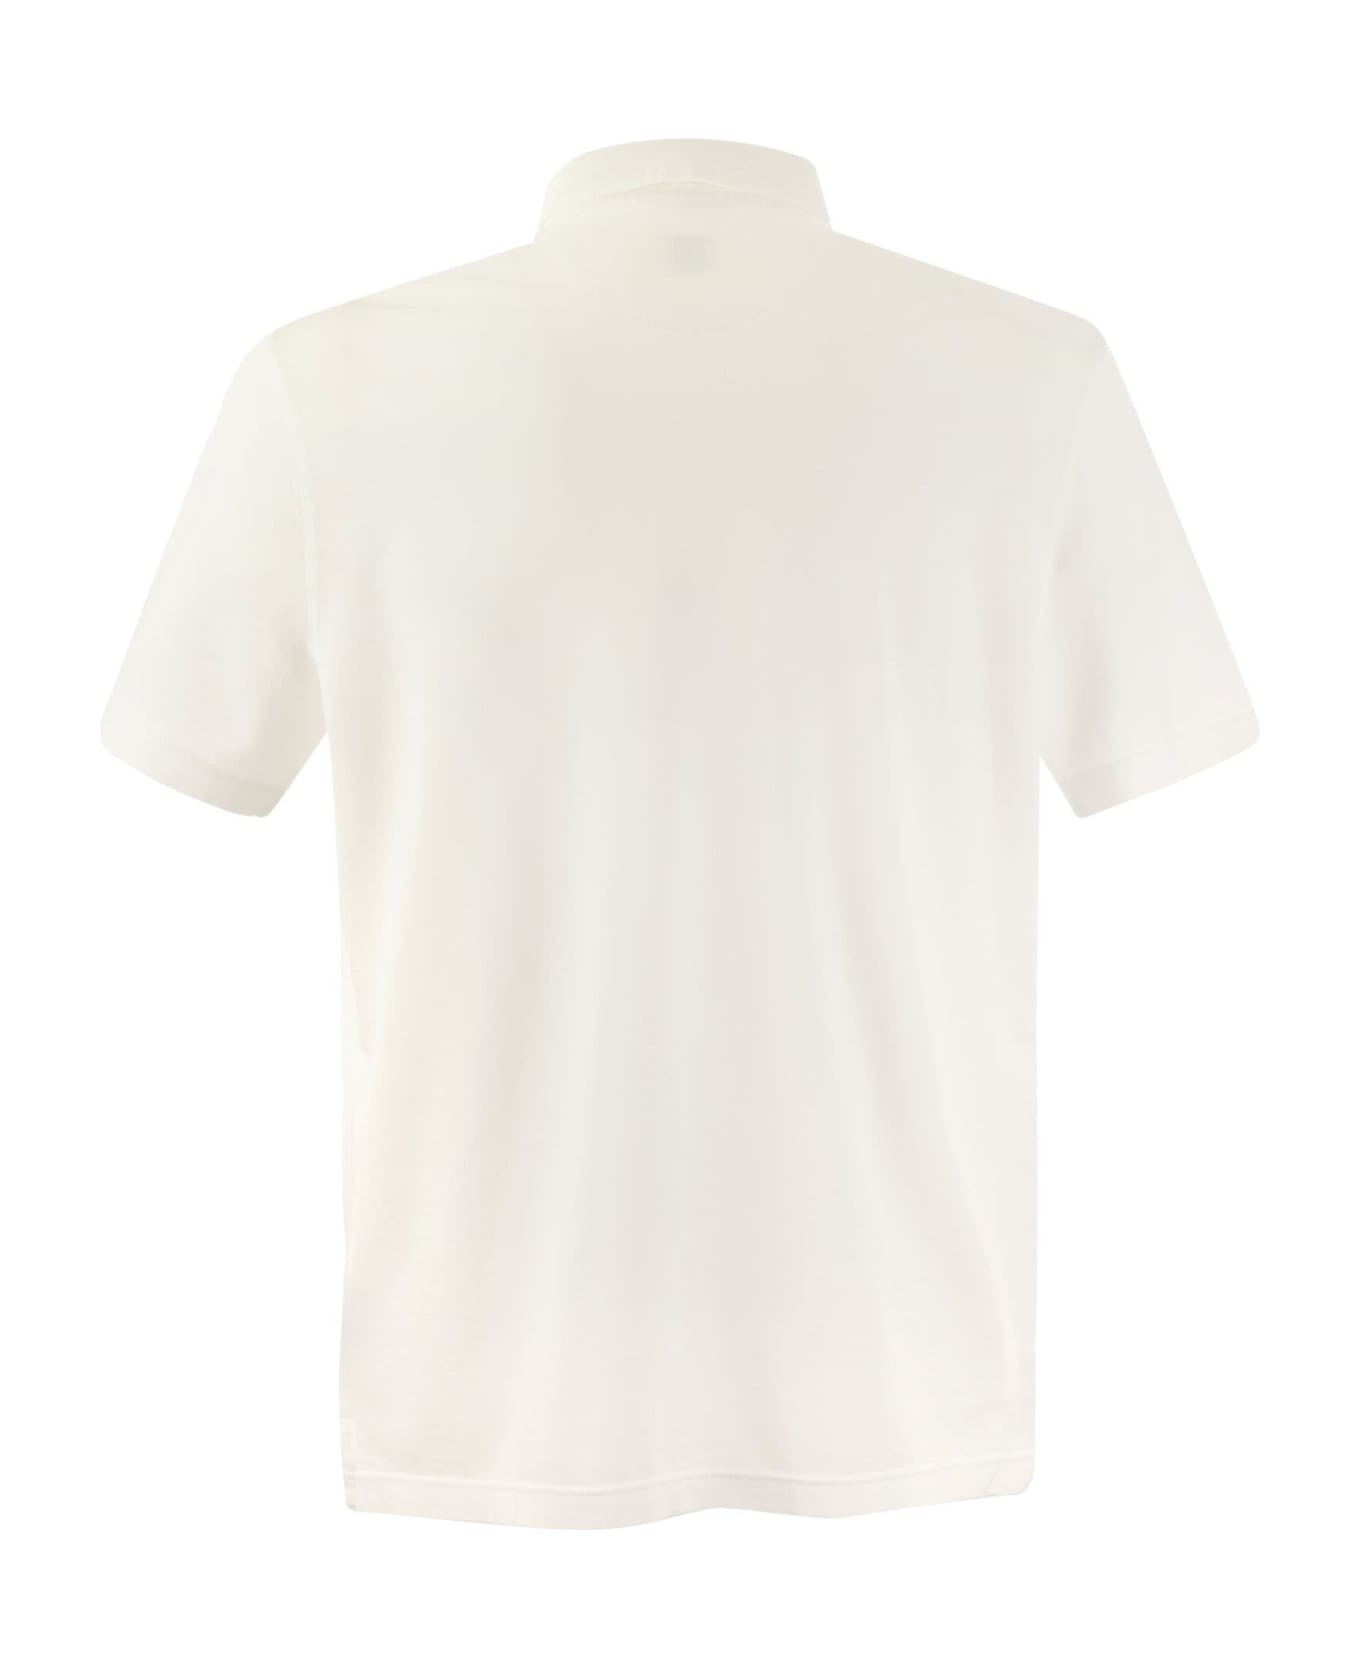 Fedeli Short-sleeved Cotton Polo Shirt - White